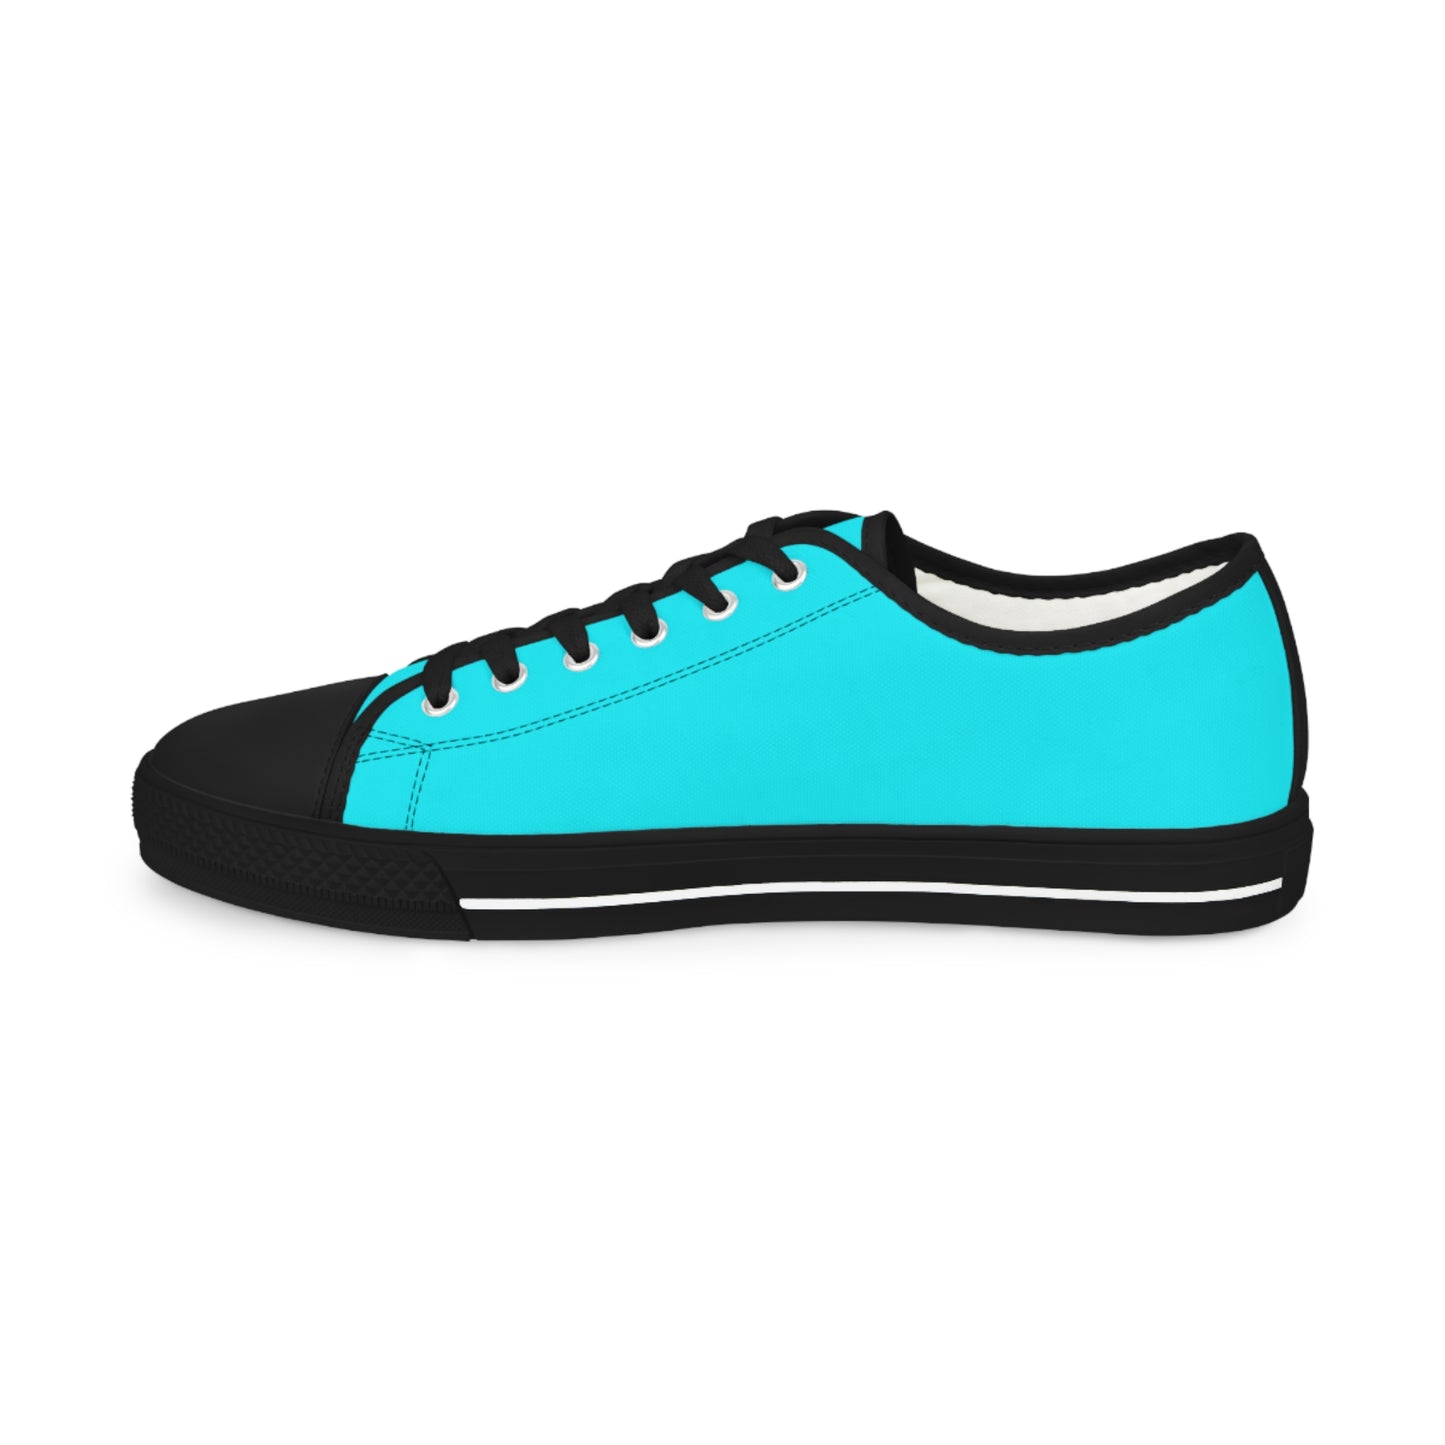 Men's Canvas Low Top Solid Color Sneakers - Cool Pool Aqua Blue US 14 Black sole